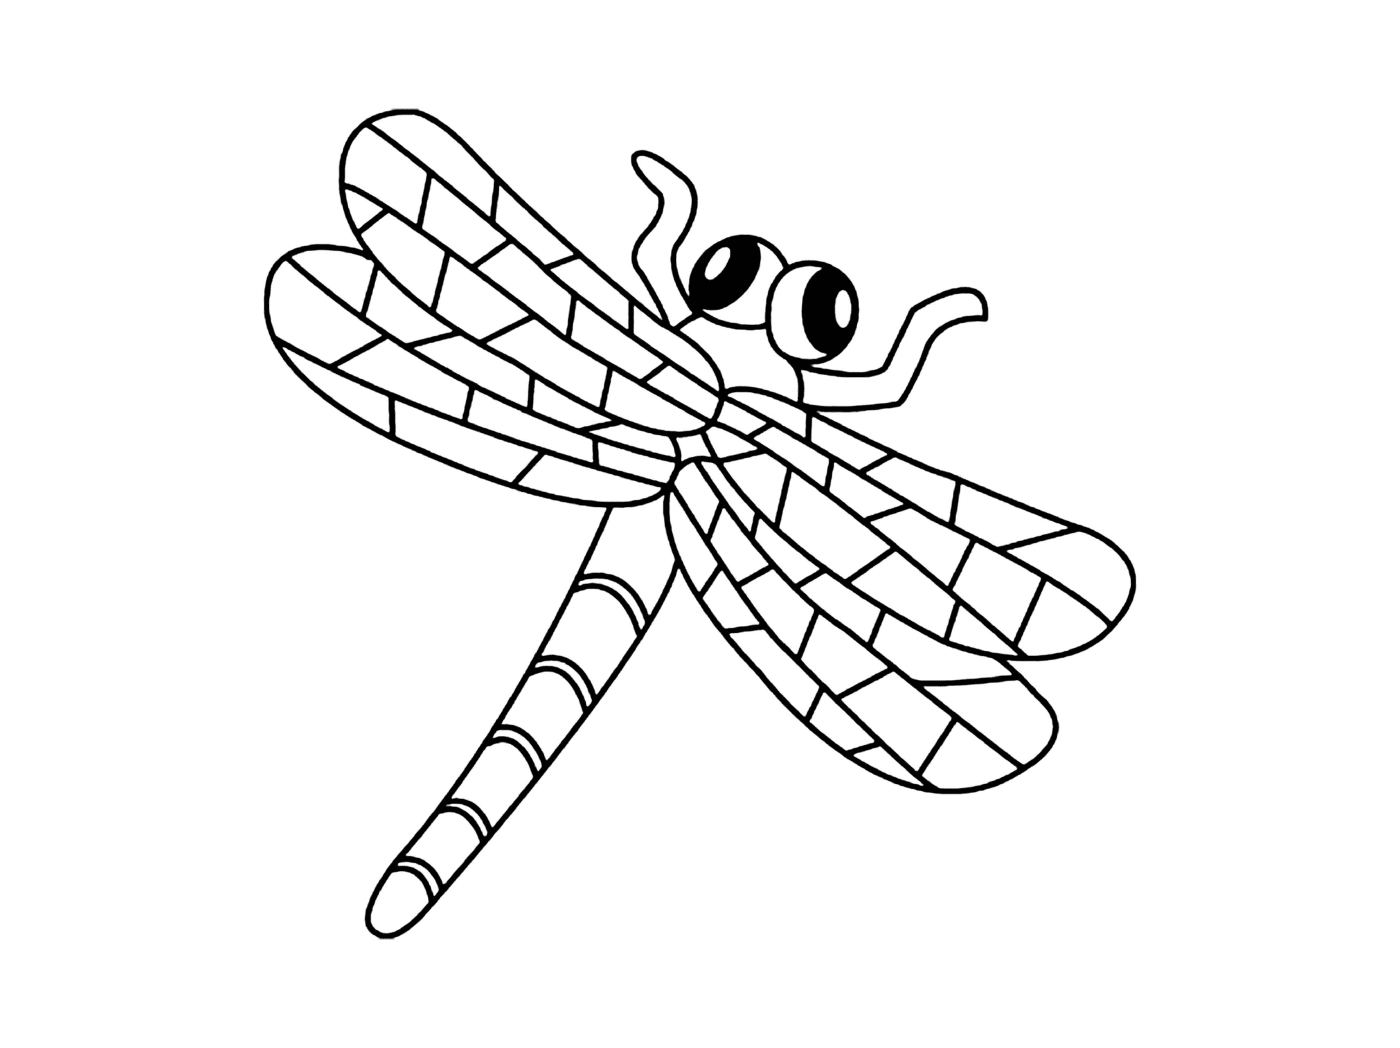  Fácil: La libélula en el jardín de infantes 